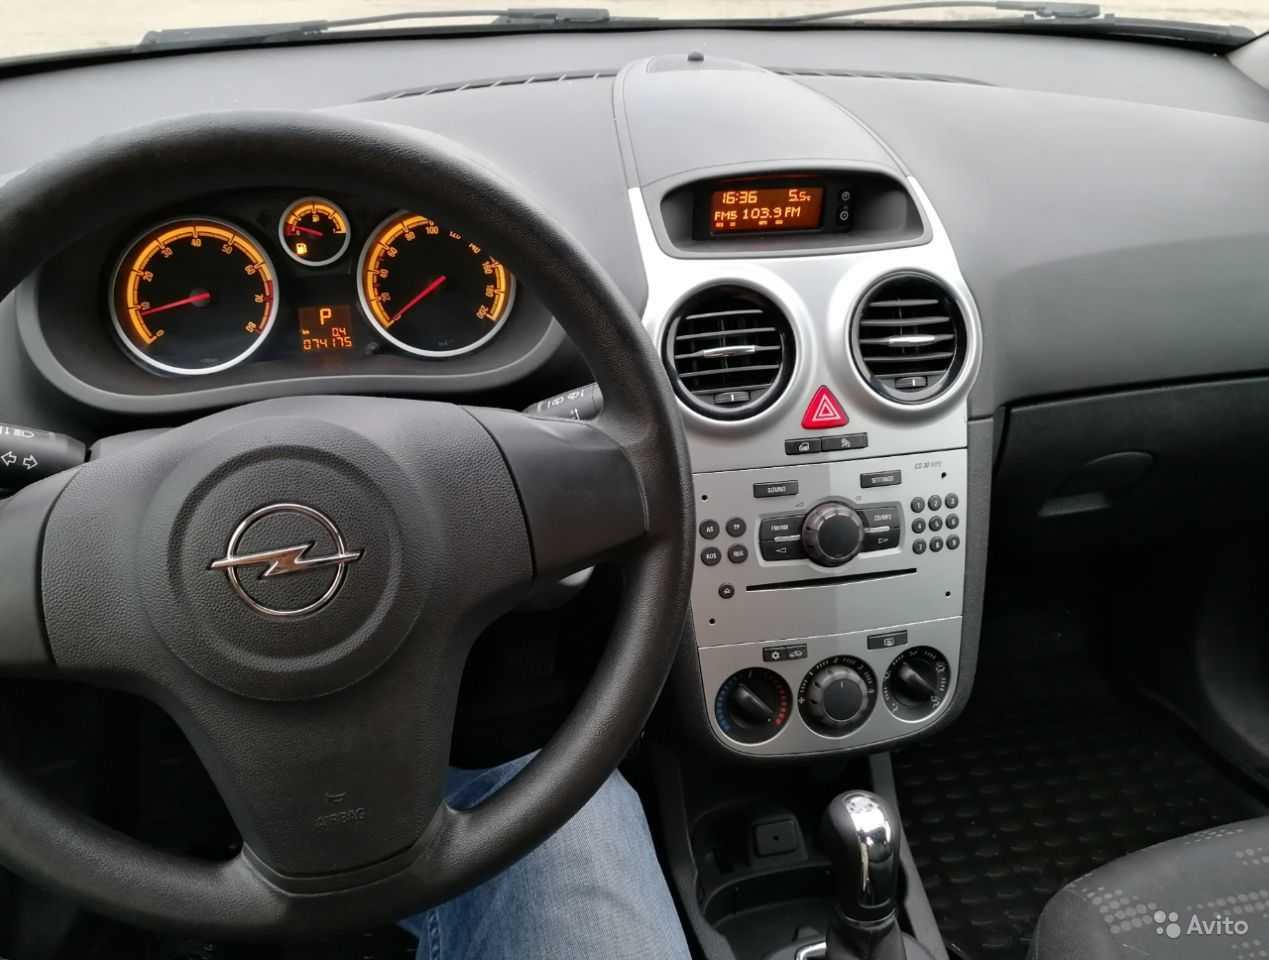 Opel corsa d (2006-2013) - общие проблемы.